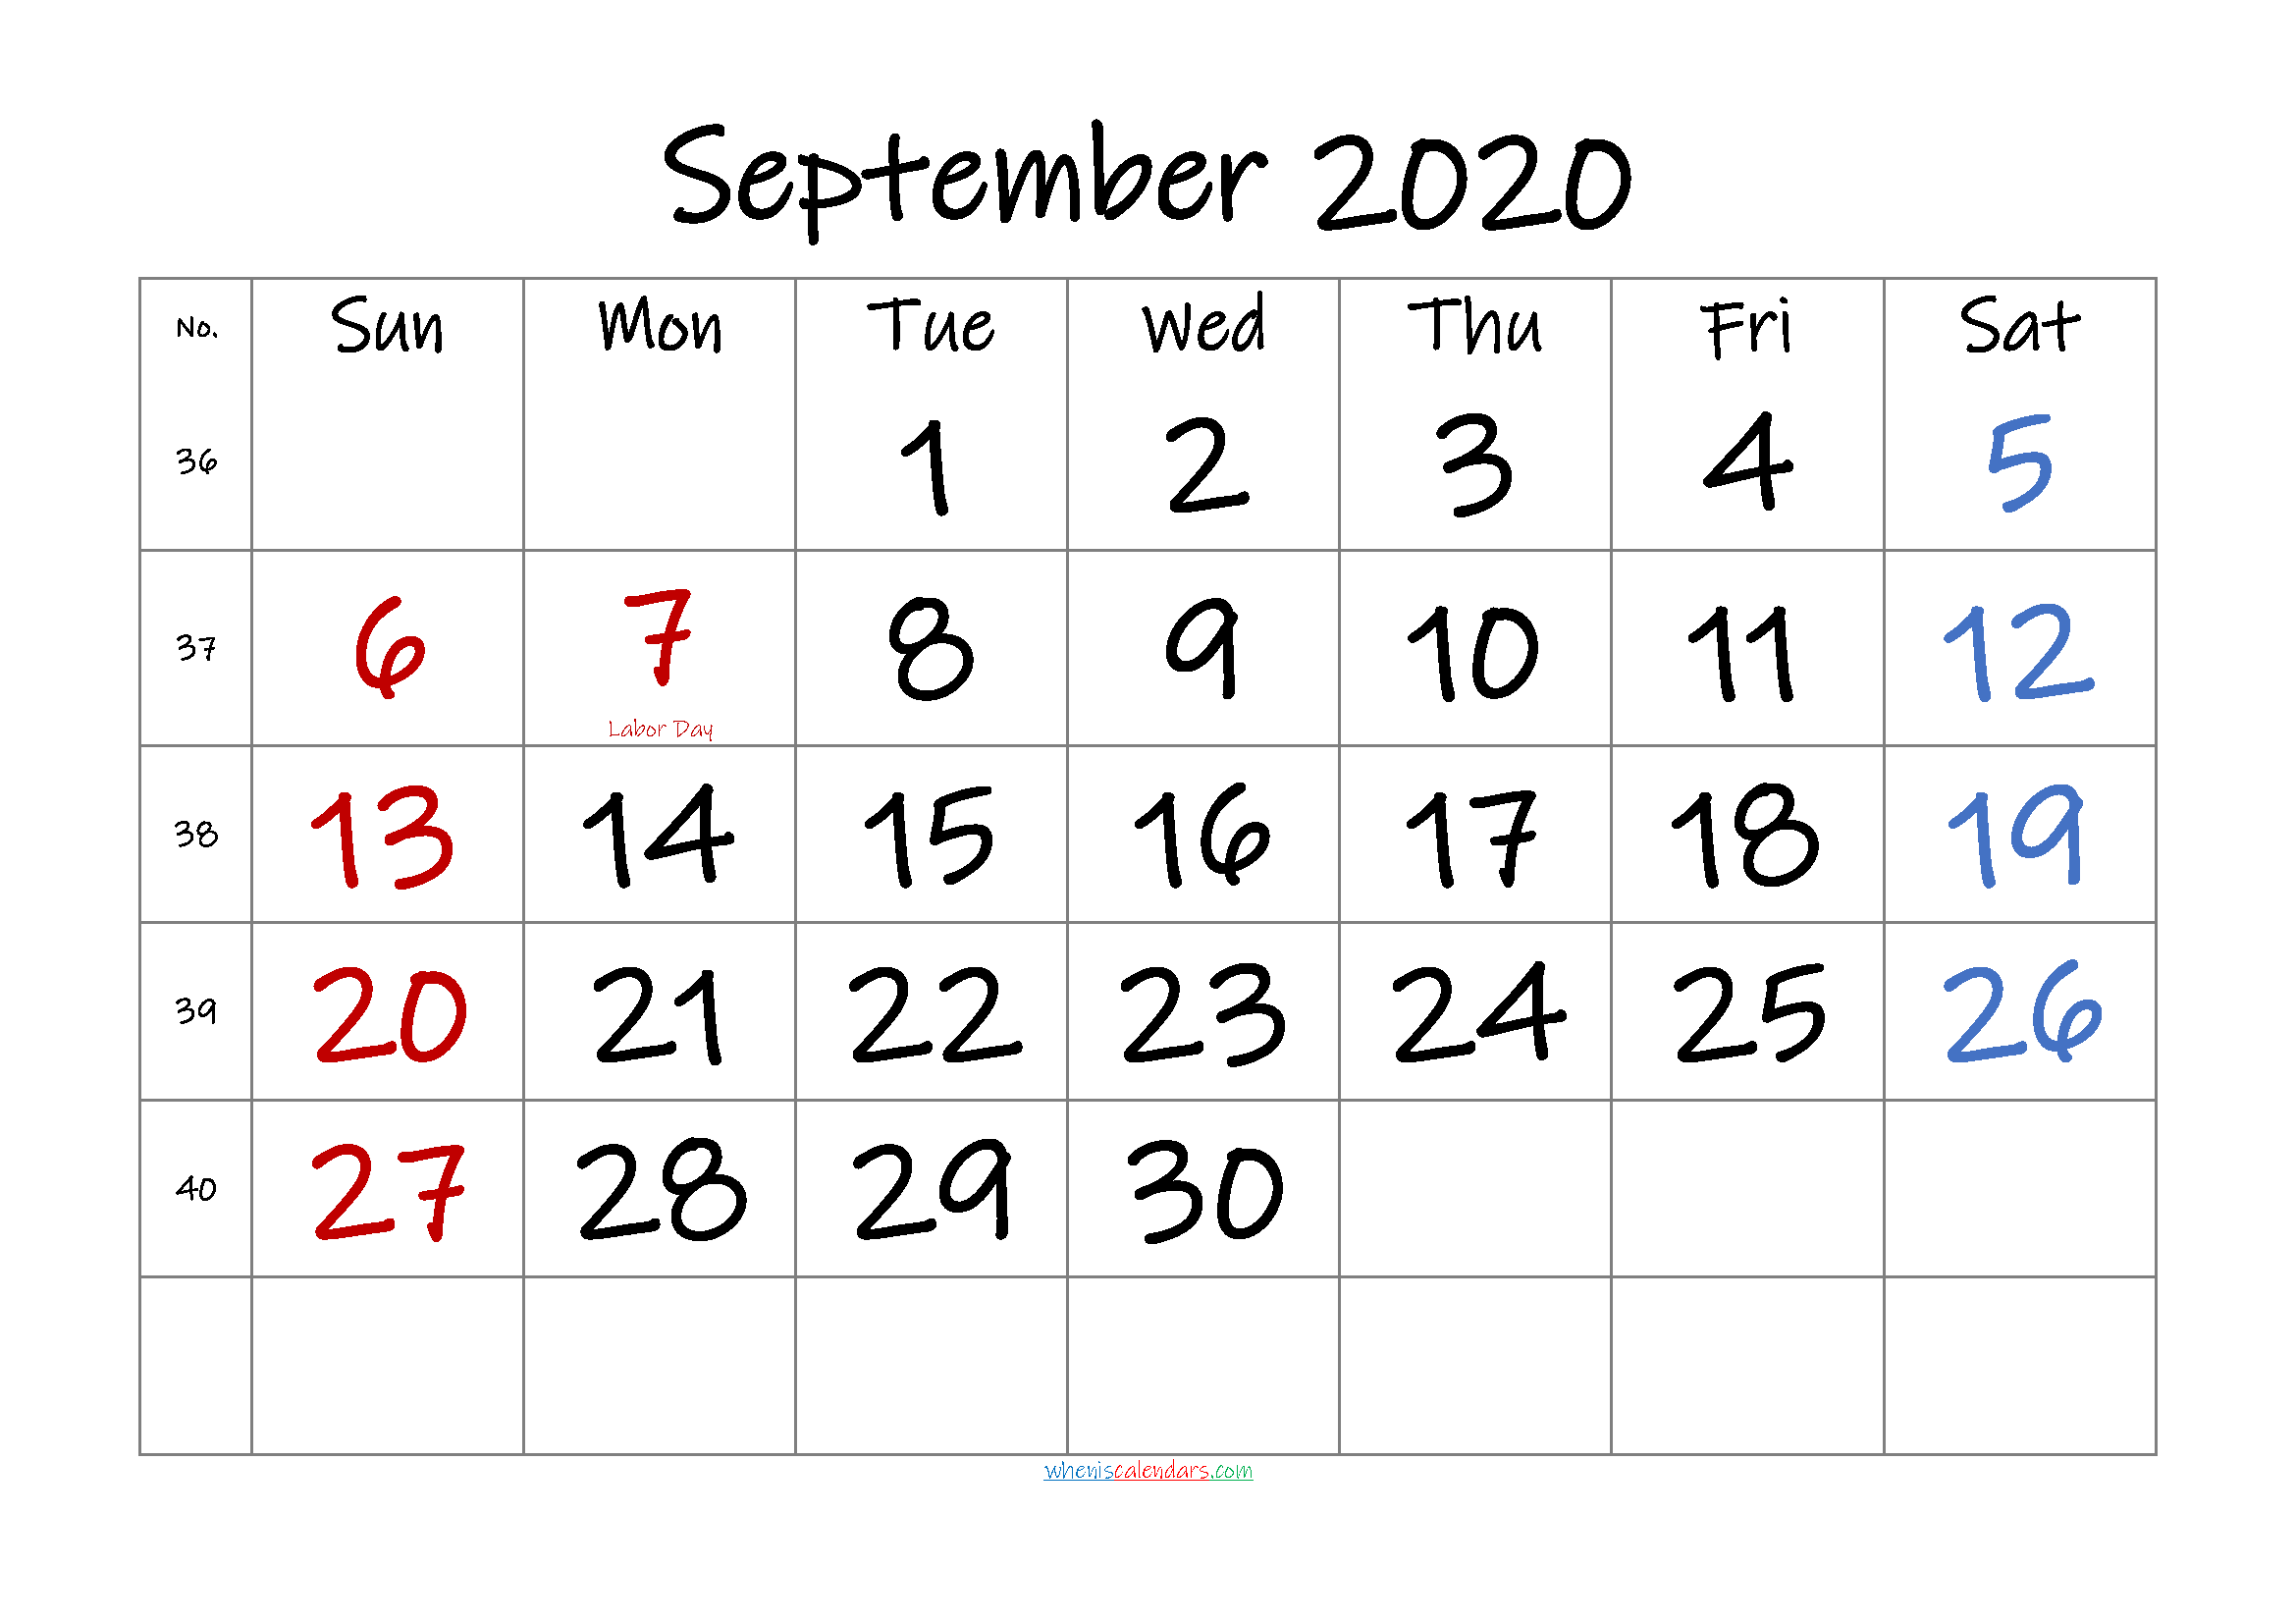 SEPTEMBER 2020 Printable Calendar with Holidays